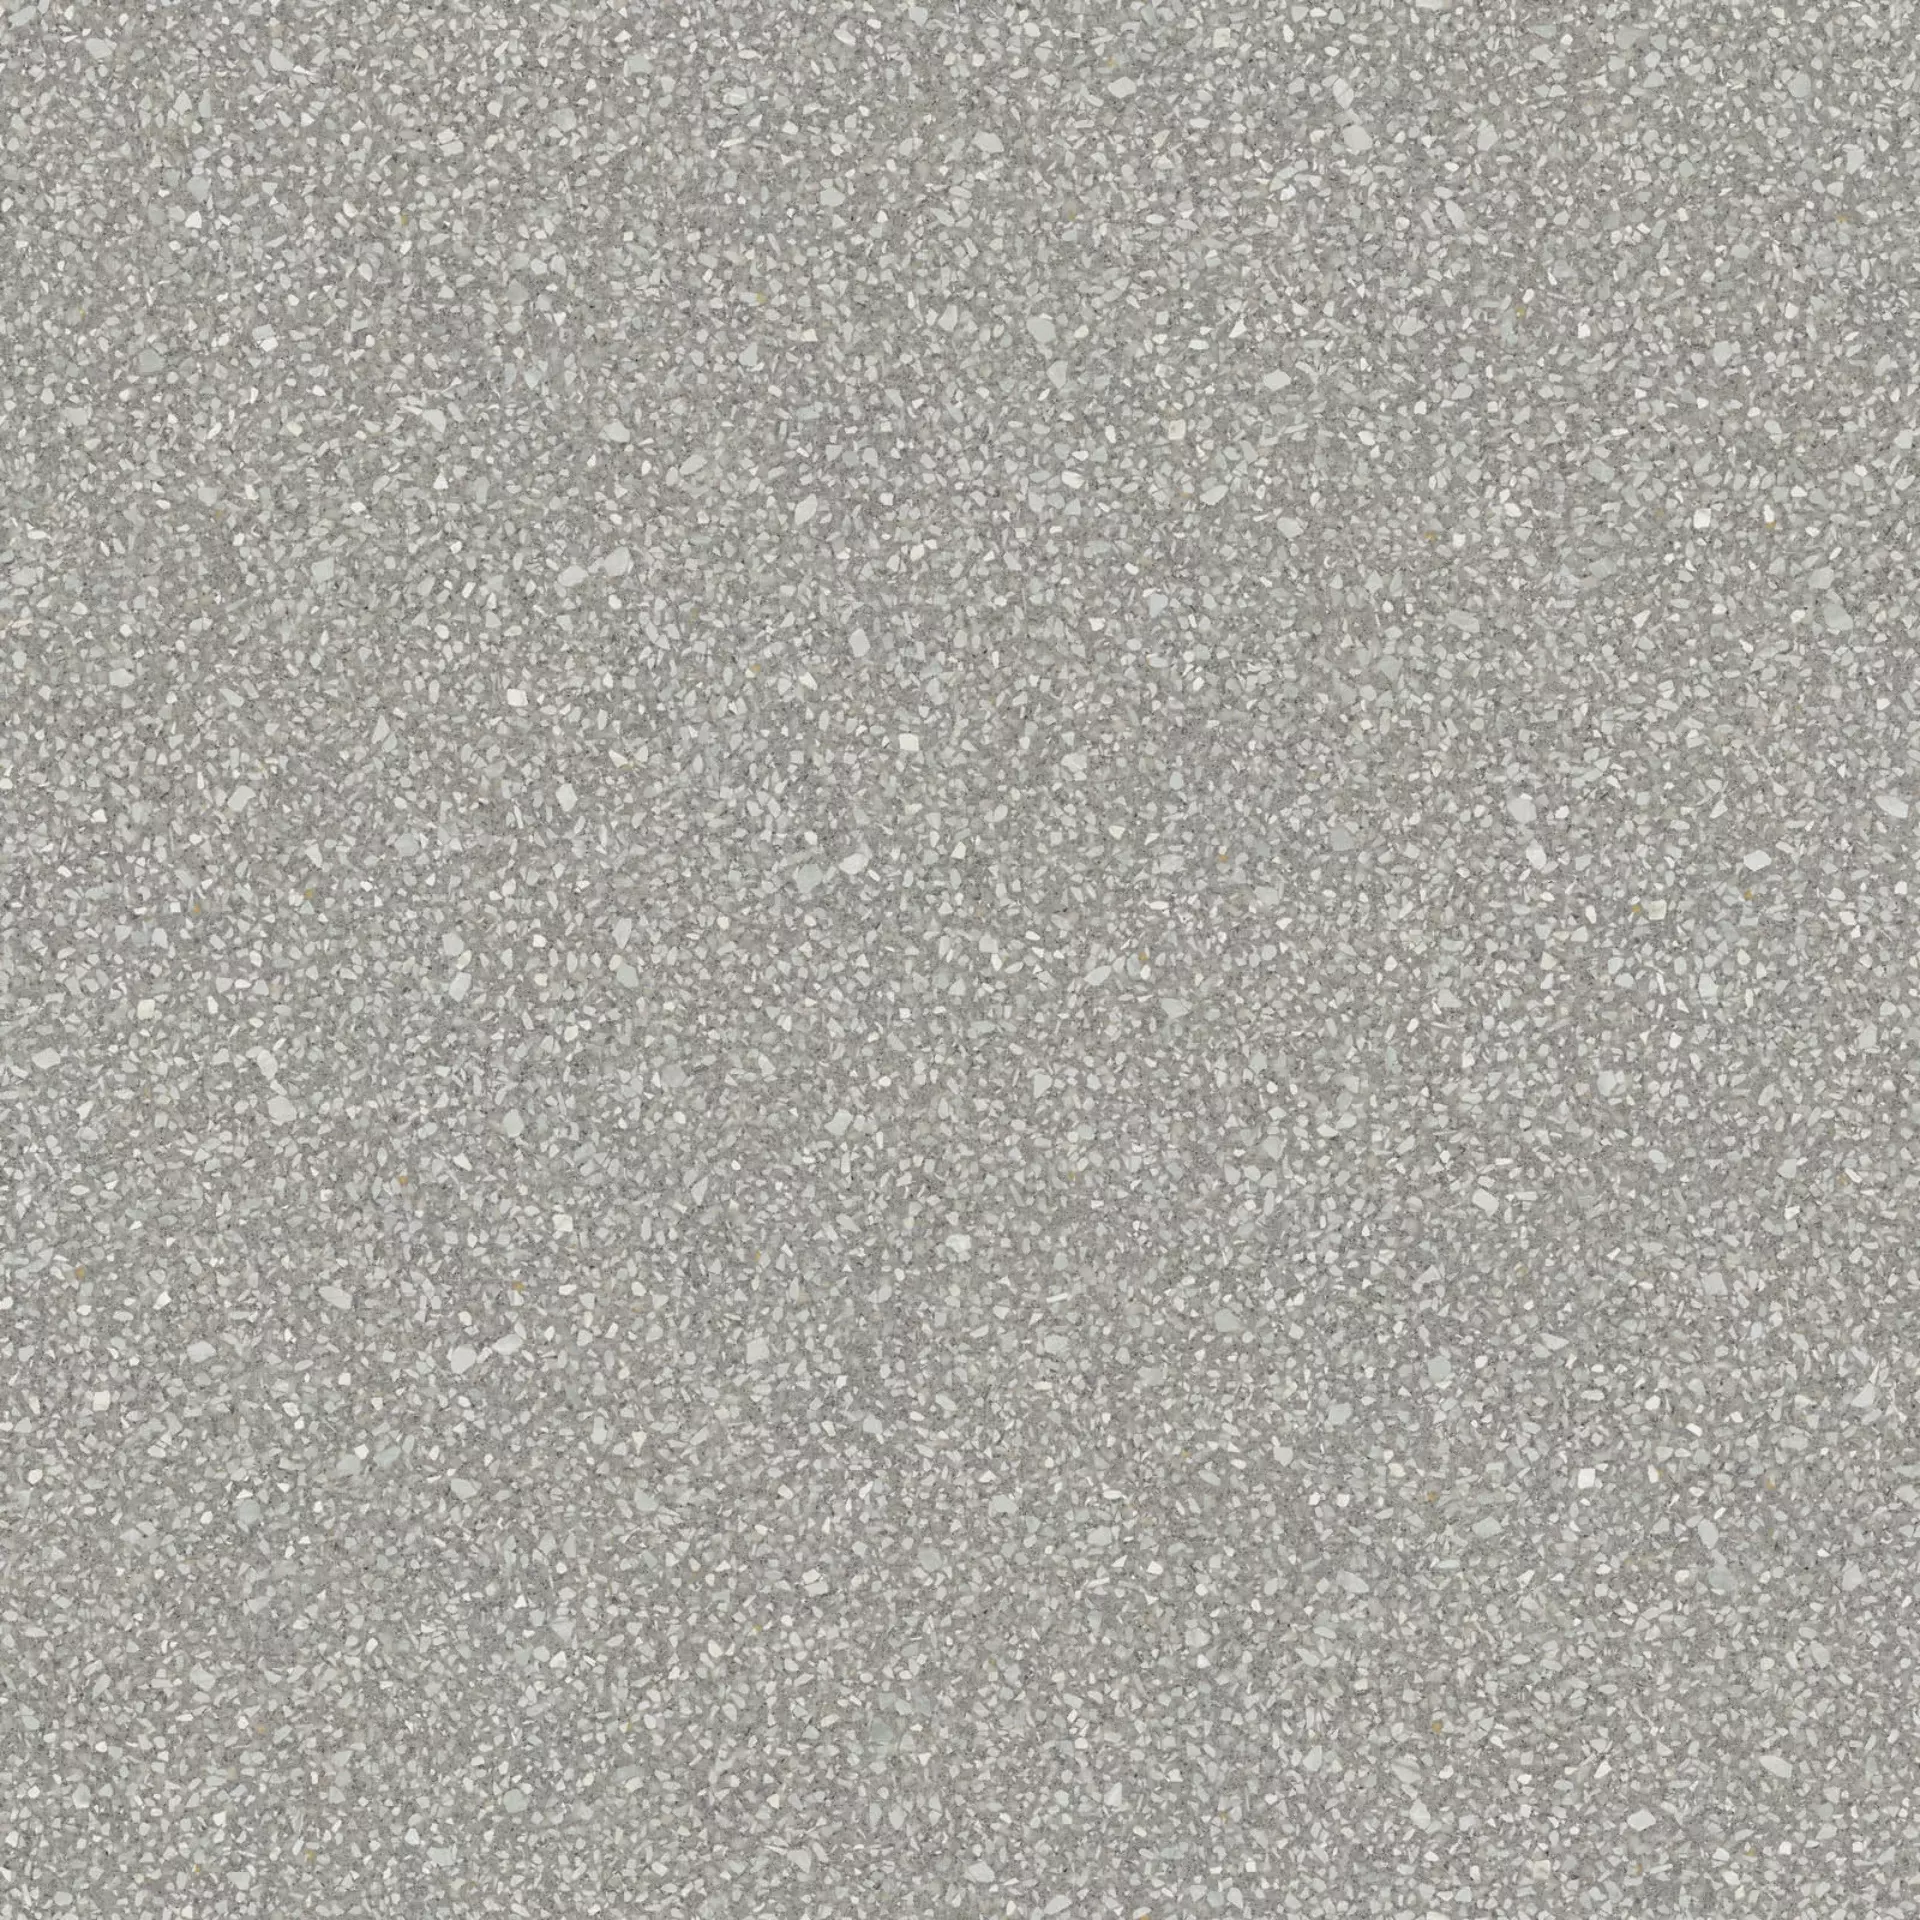 ABK Blend Dots Grey Lappato PF60005831 90x90cm rectified 8,5mm